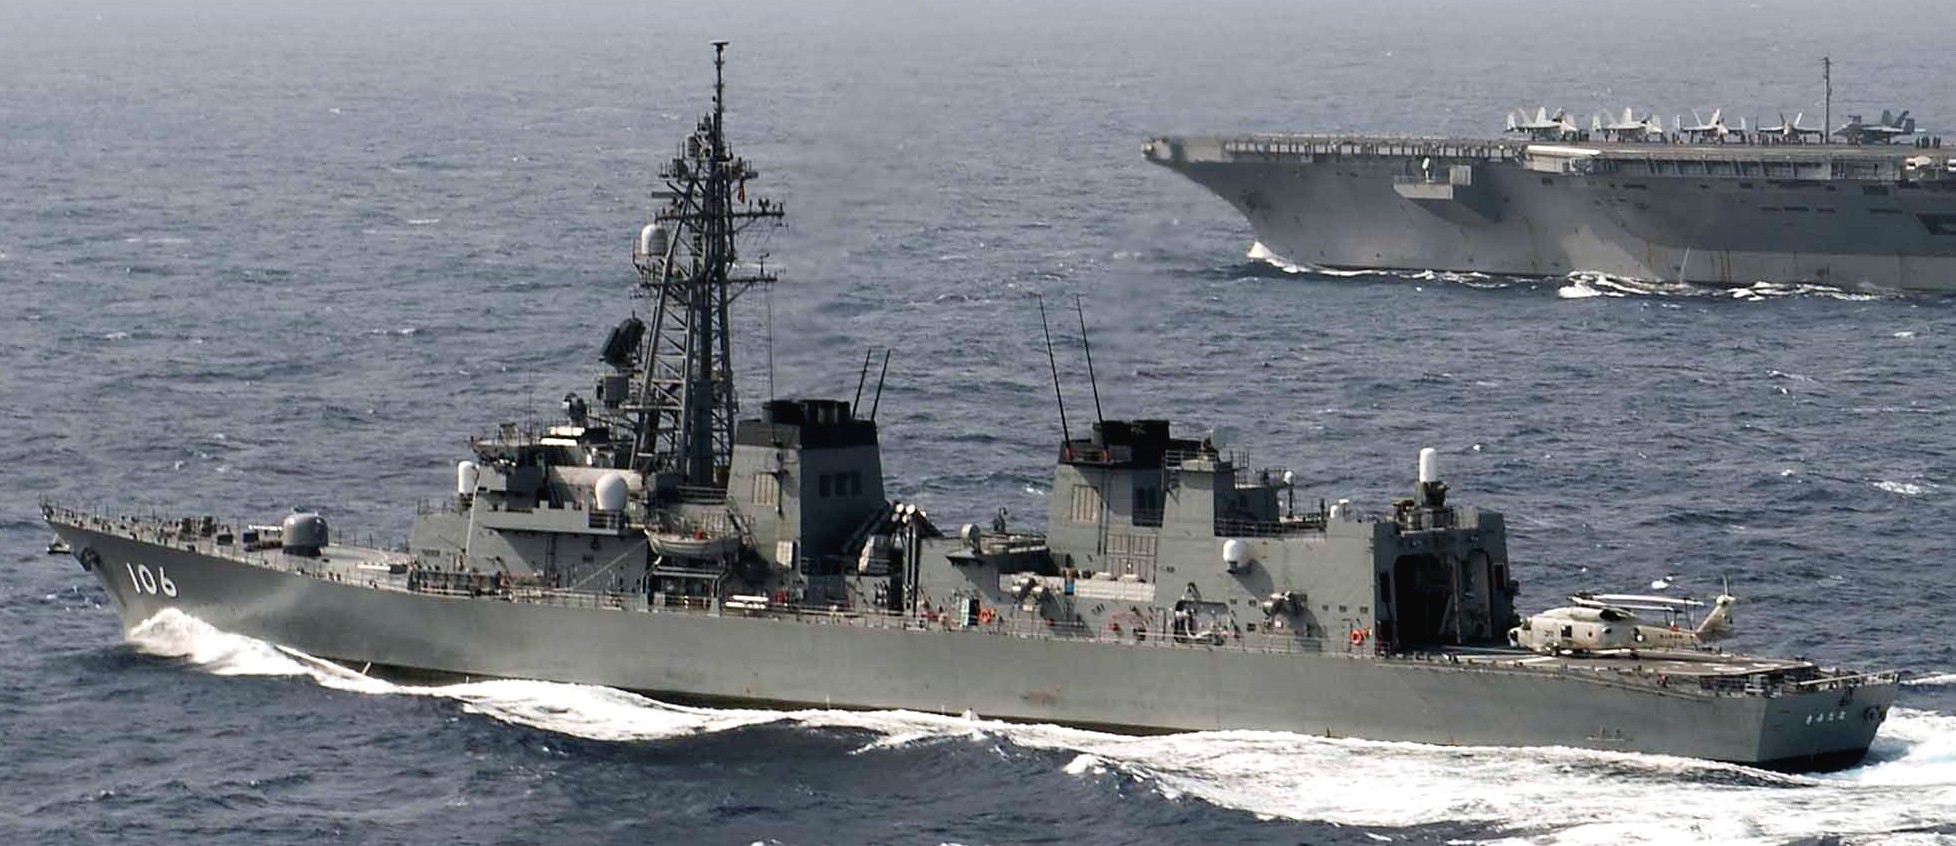 dd-106 js samidare murasame class destroyer japan maritime self defense force jmsdf 22